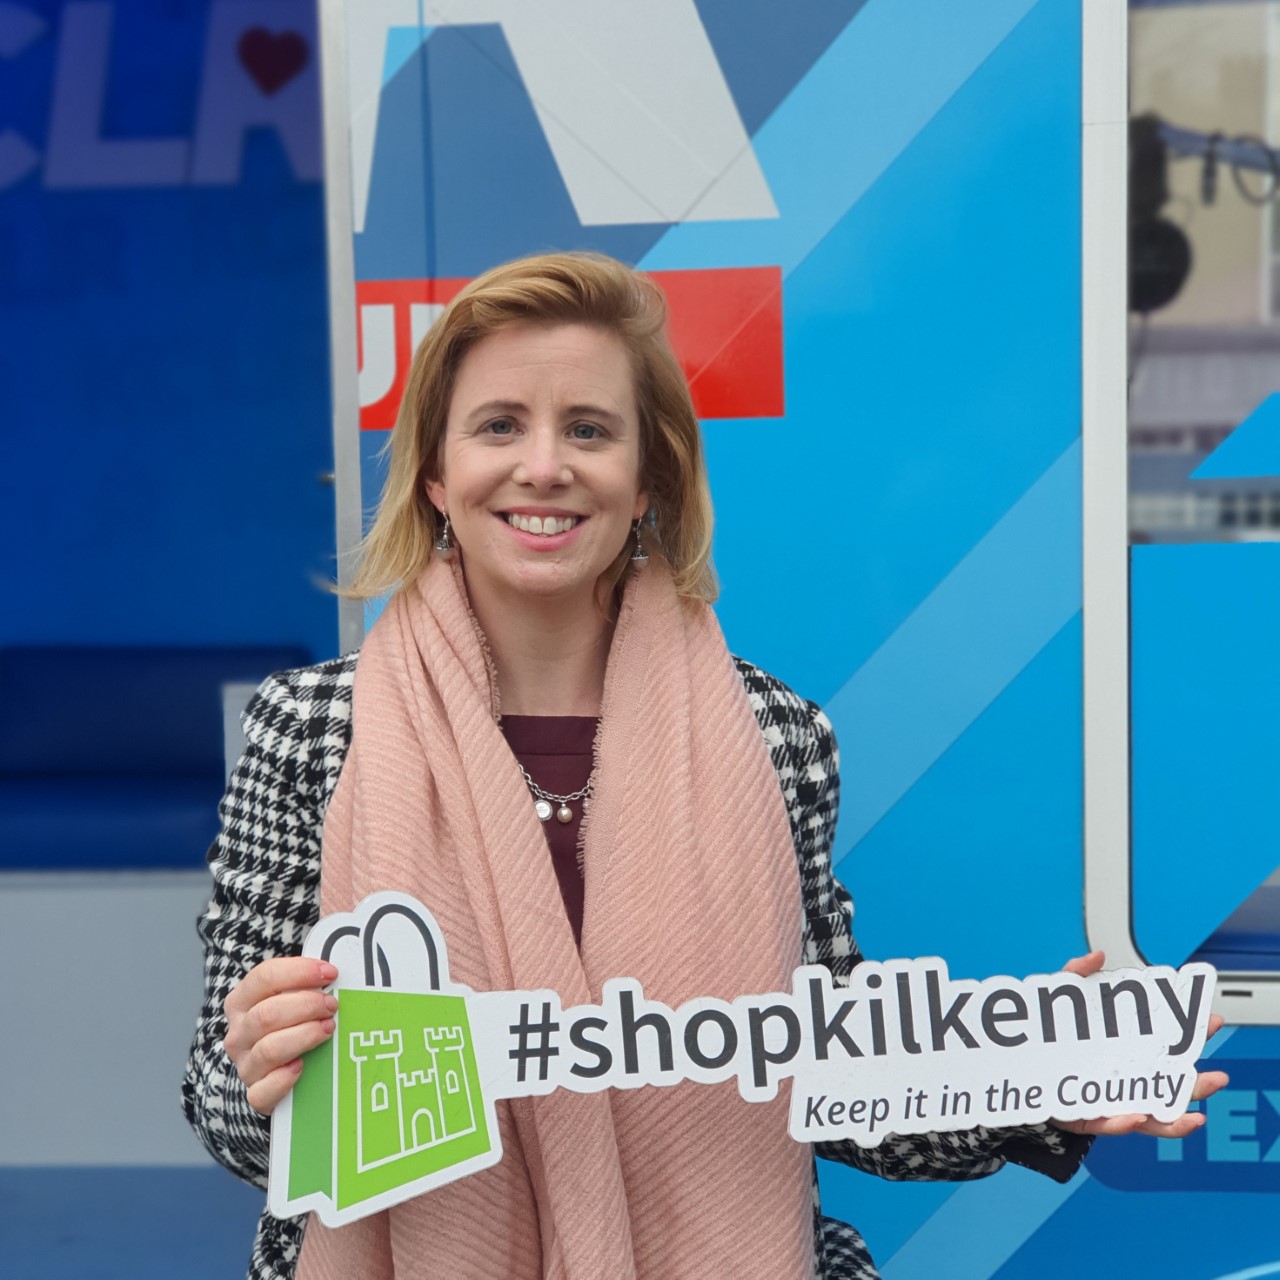 KCLR Live presenter Eimear Ní Bhraonáin holds a Shop Kilkenny sign on The Parade, Kilkenny